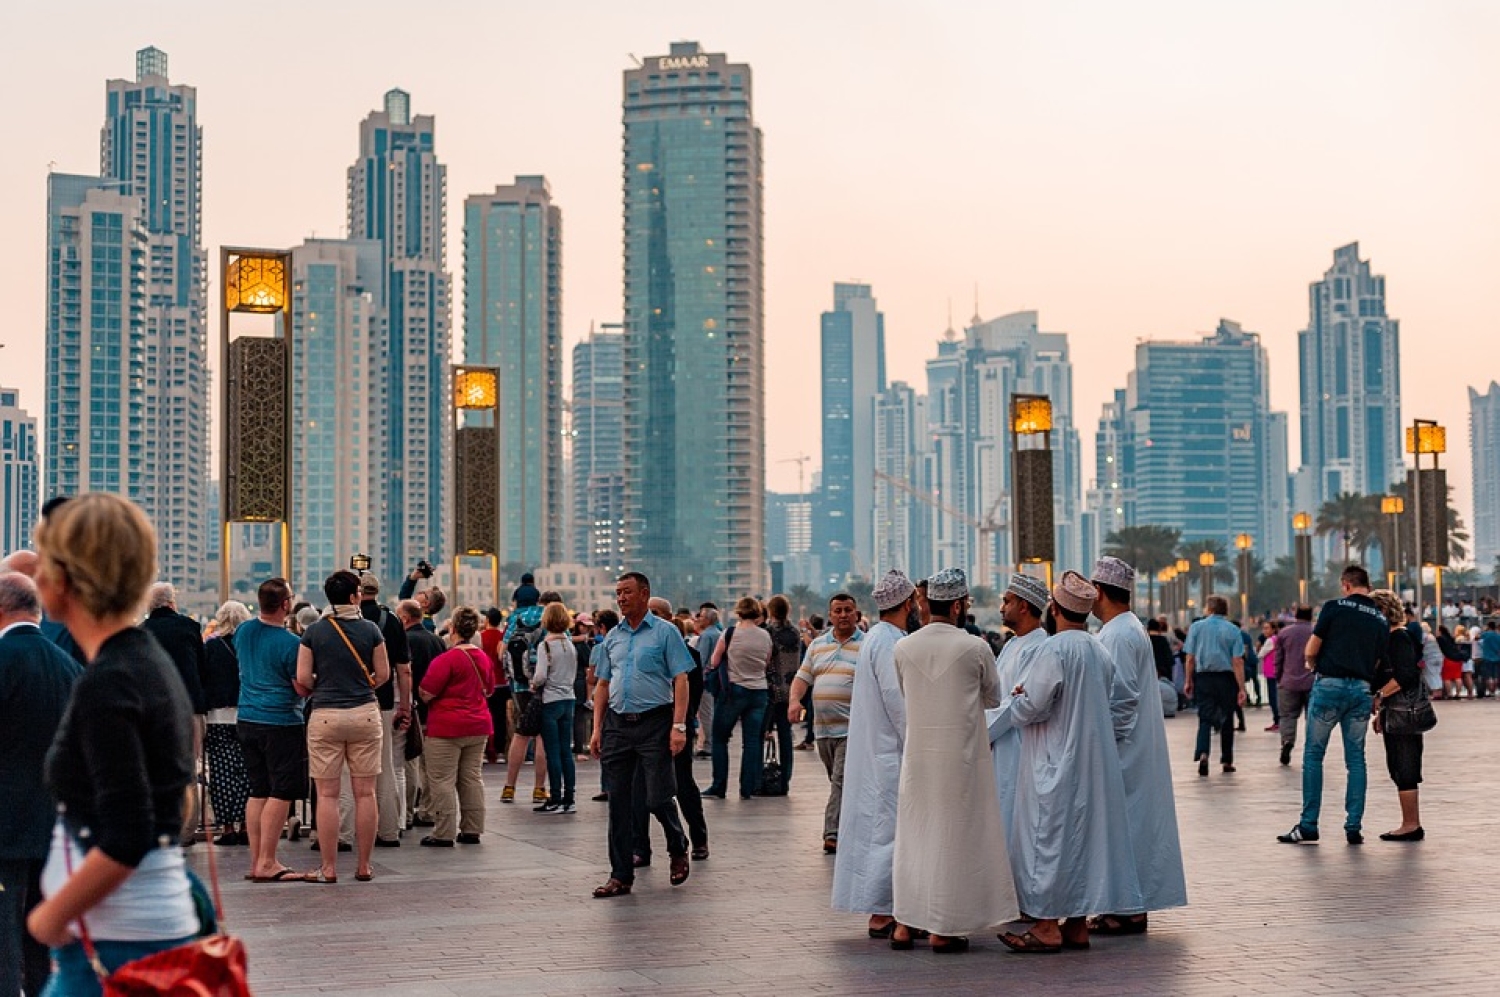 Dubai Destinations campaign kicks off, invites tourists to enjoy an epic summer